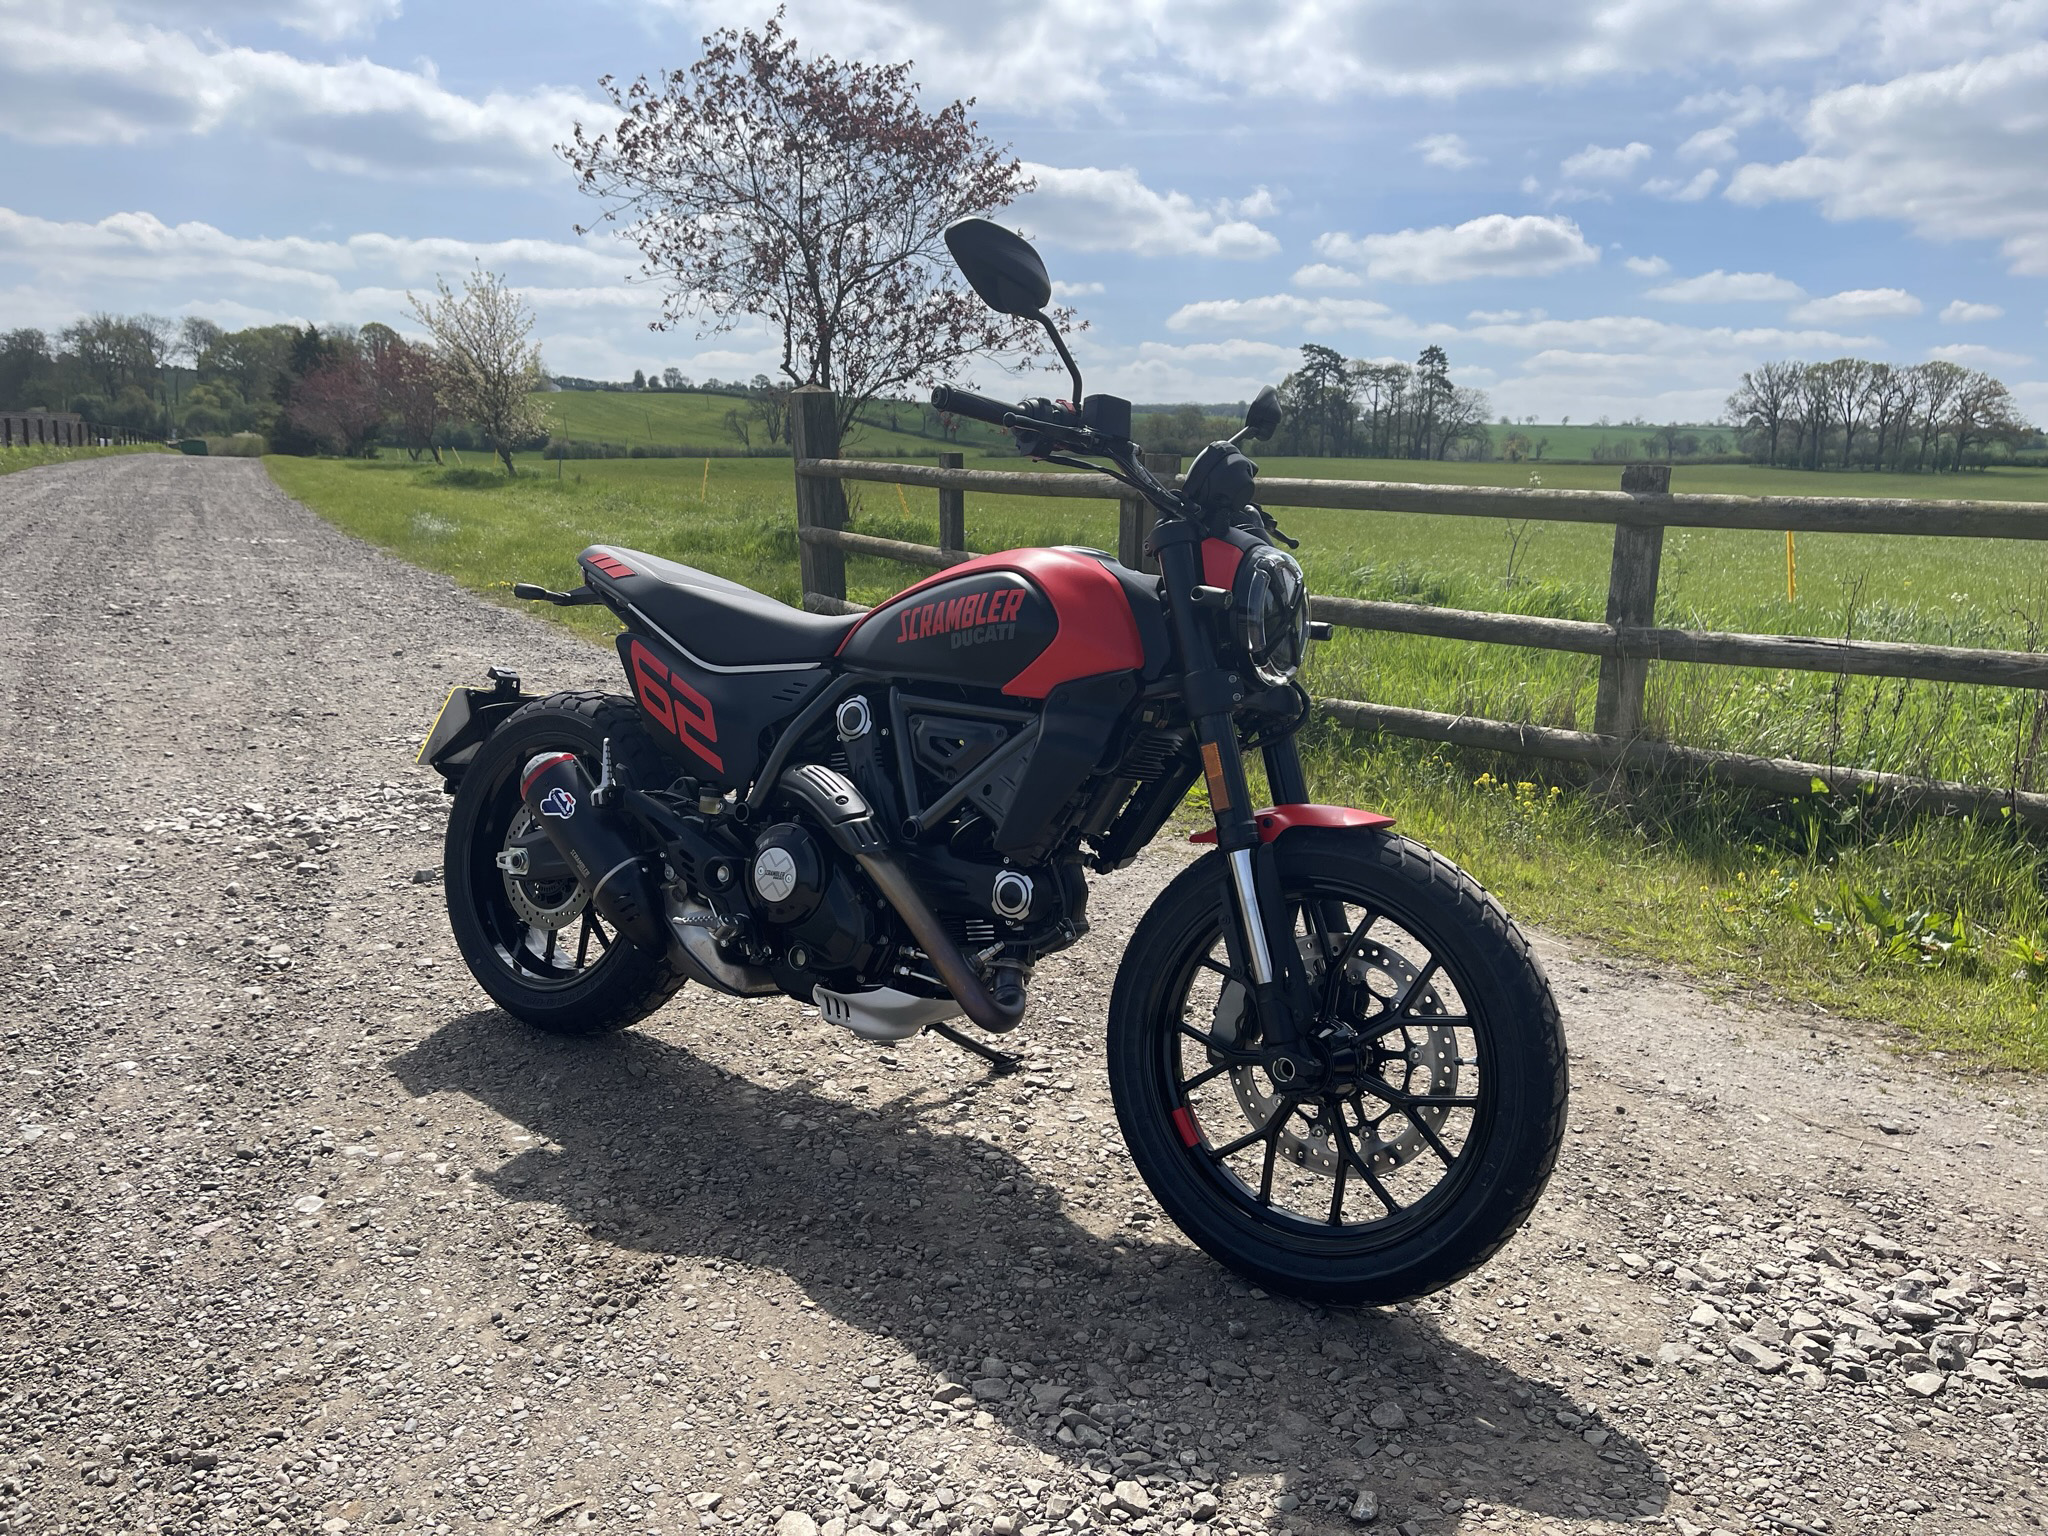 2023 Ducati Scrambler Full Throttle in the UK countryside